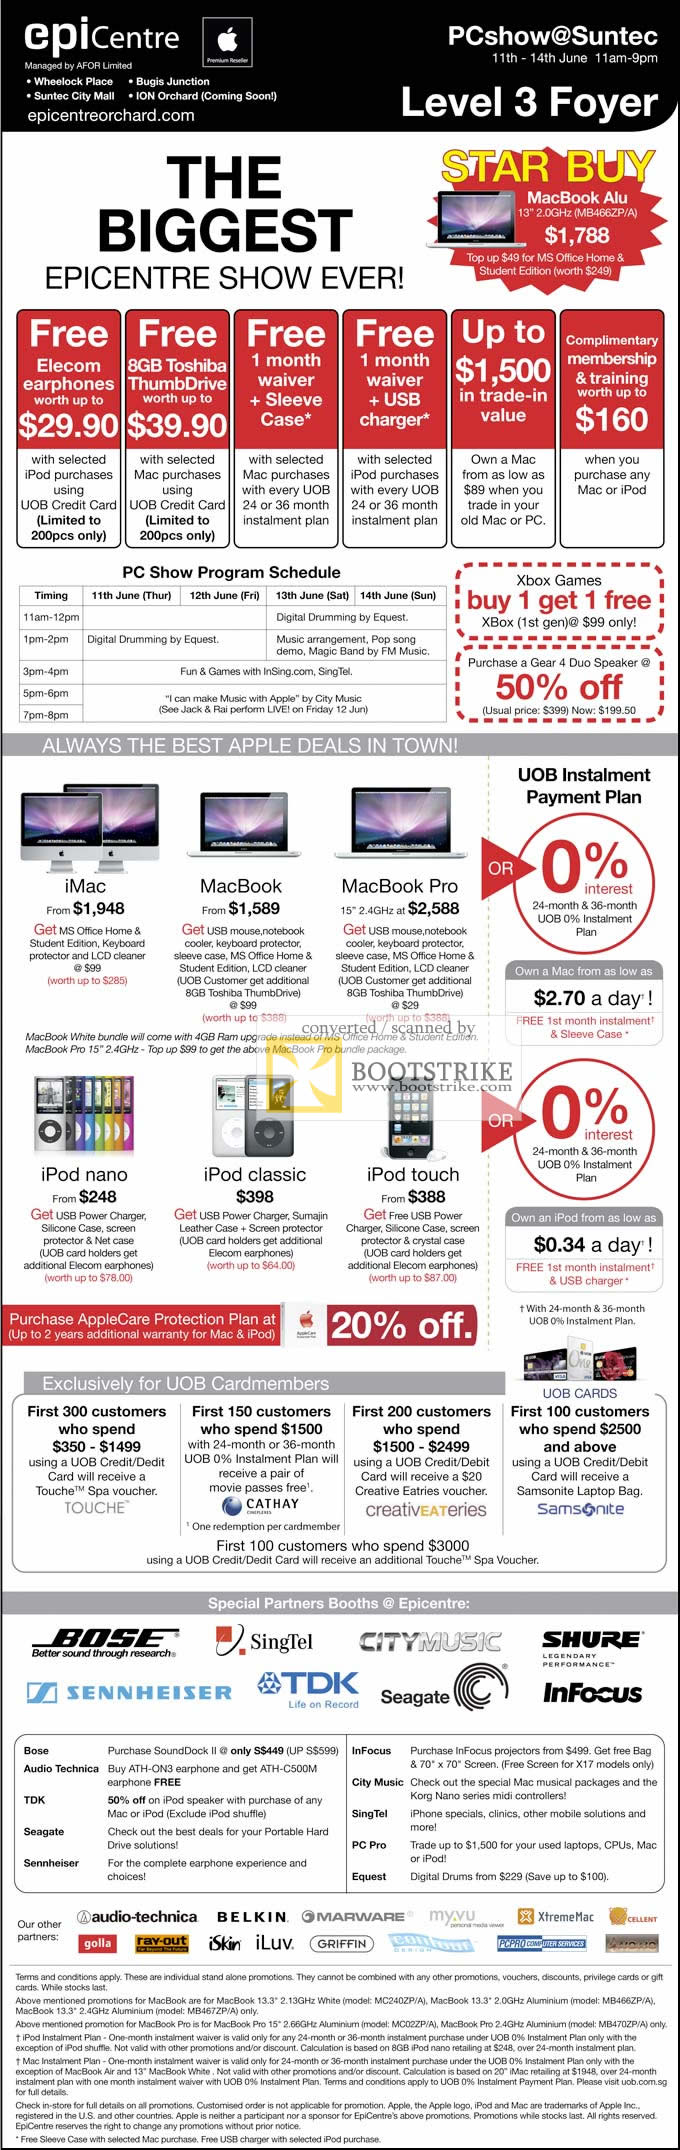 PC Show 2009 price list image brochure of Apple EpiCentre MacBook Alu IMac IPod Nano Classic Touch